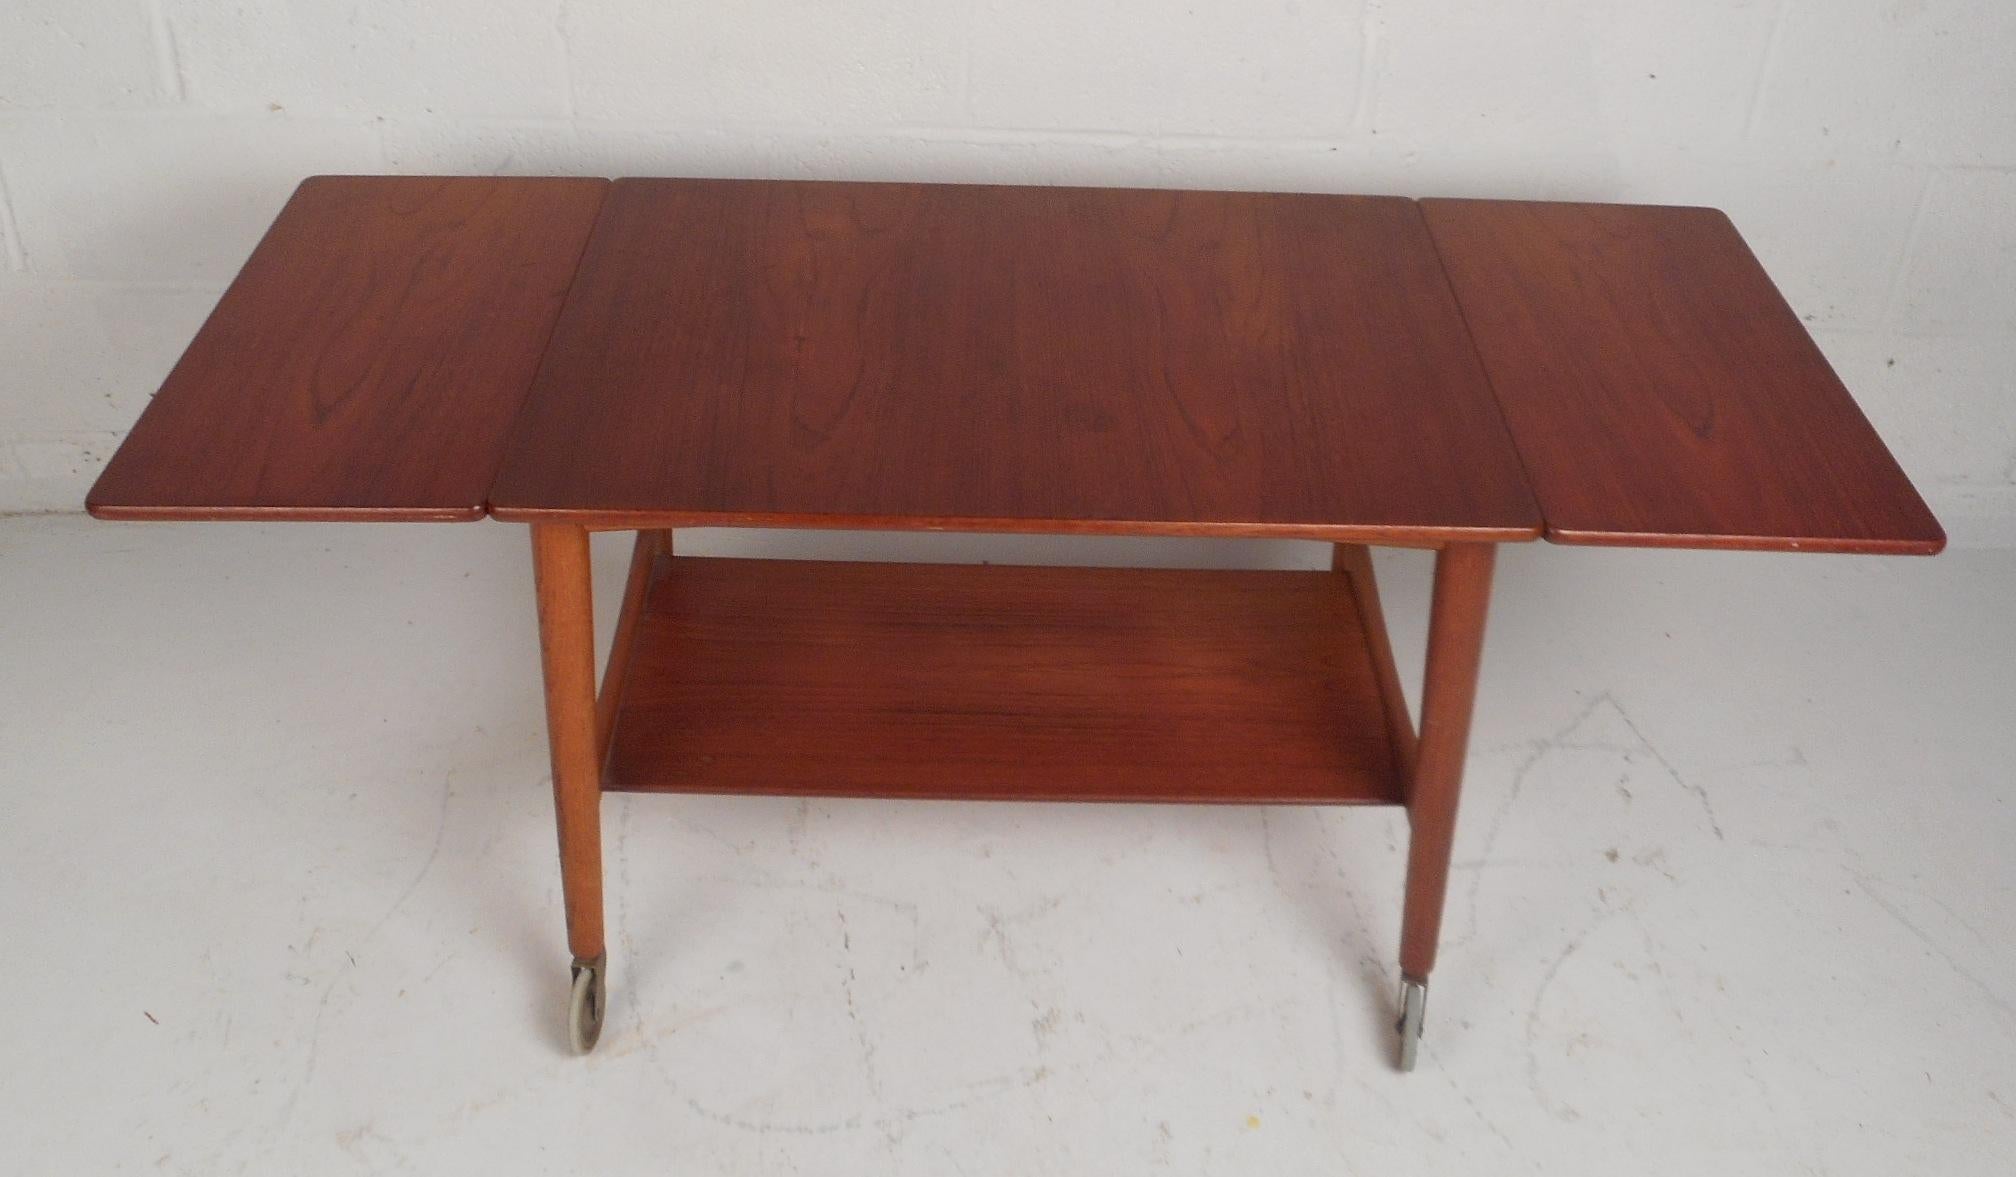 This beautiful vintage modern drop-leaf side table is stamped, 